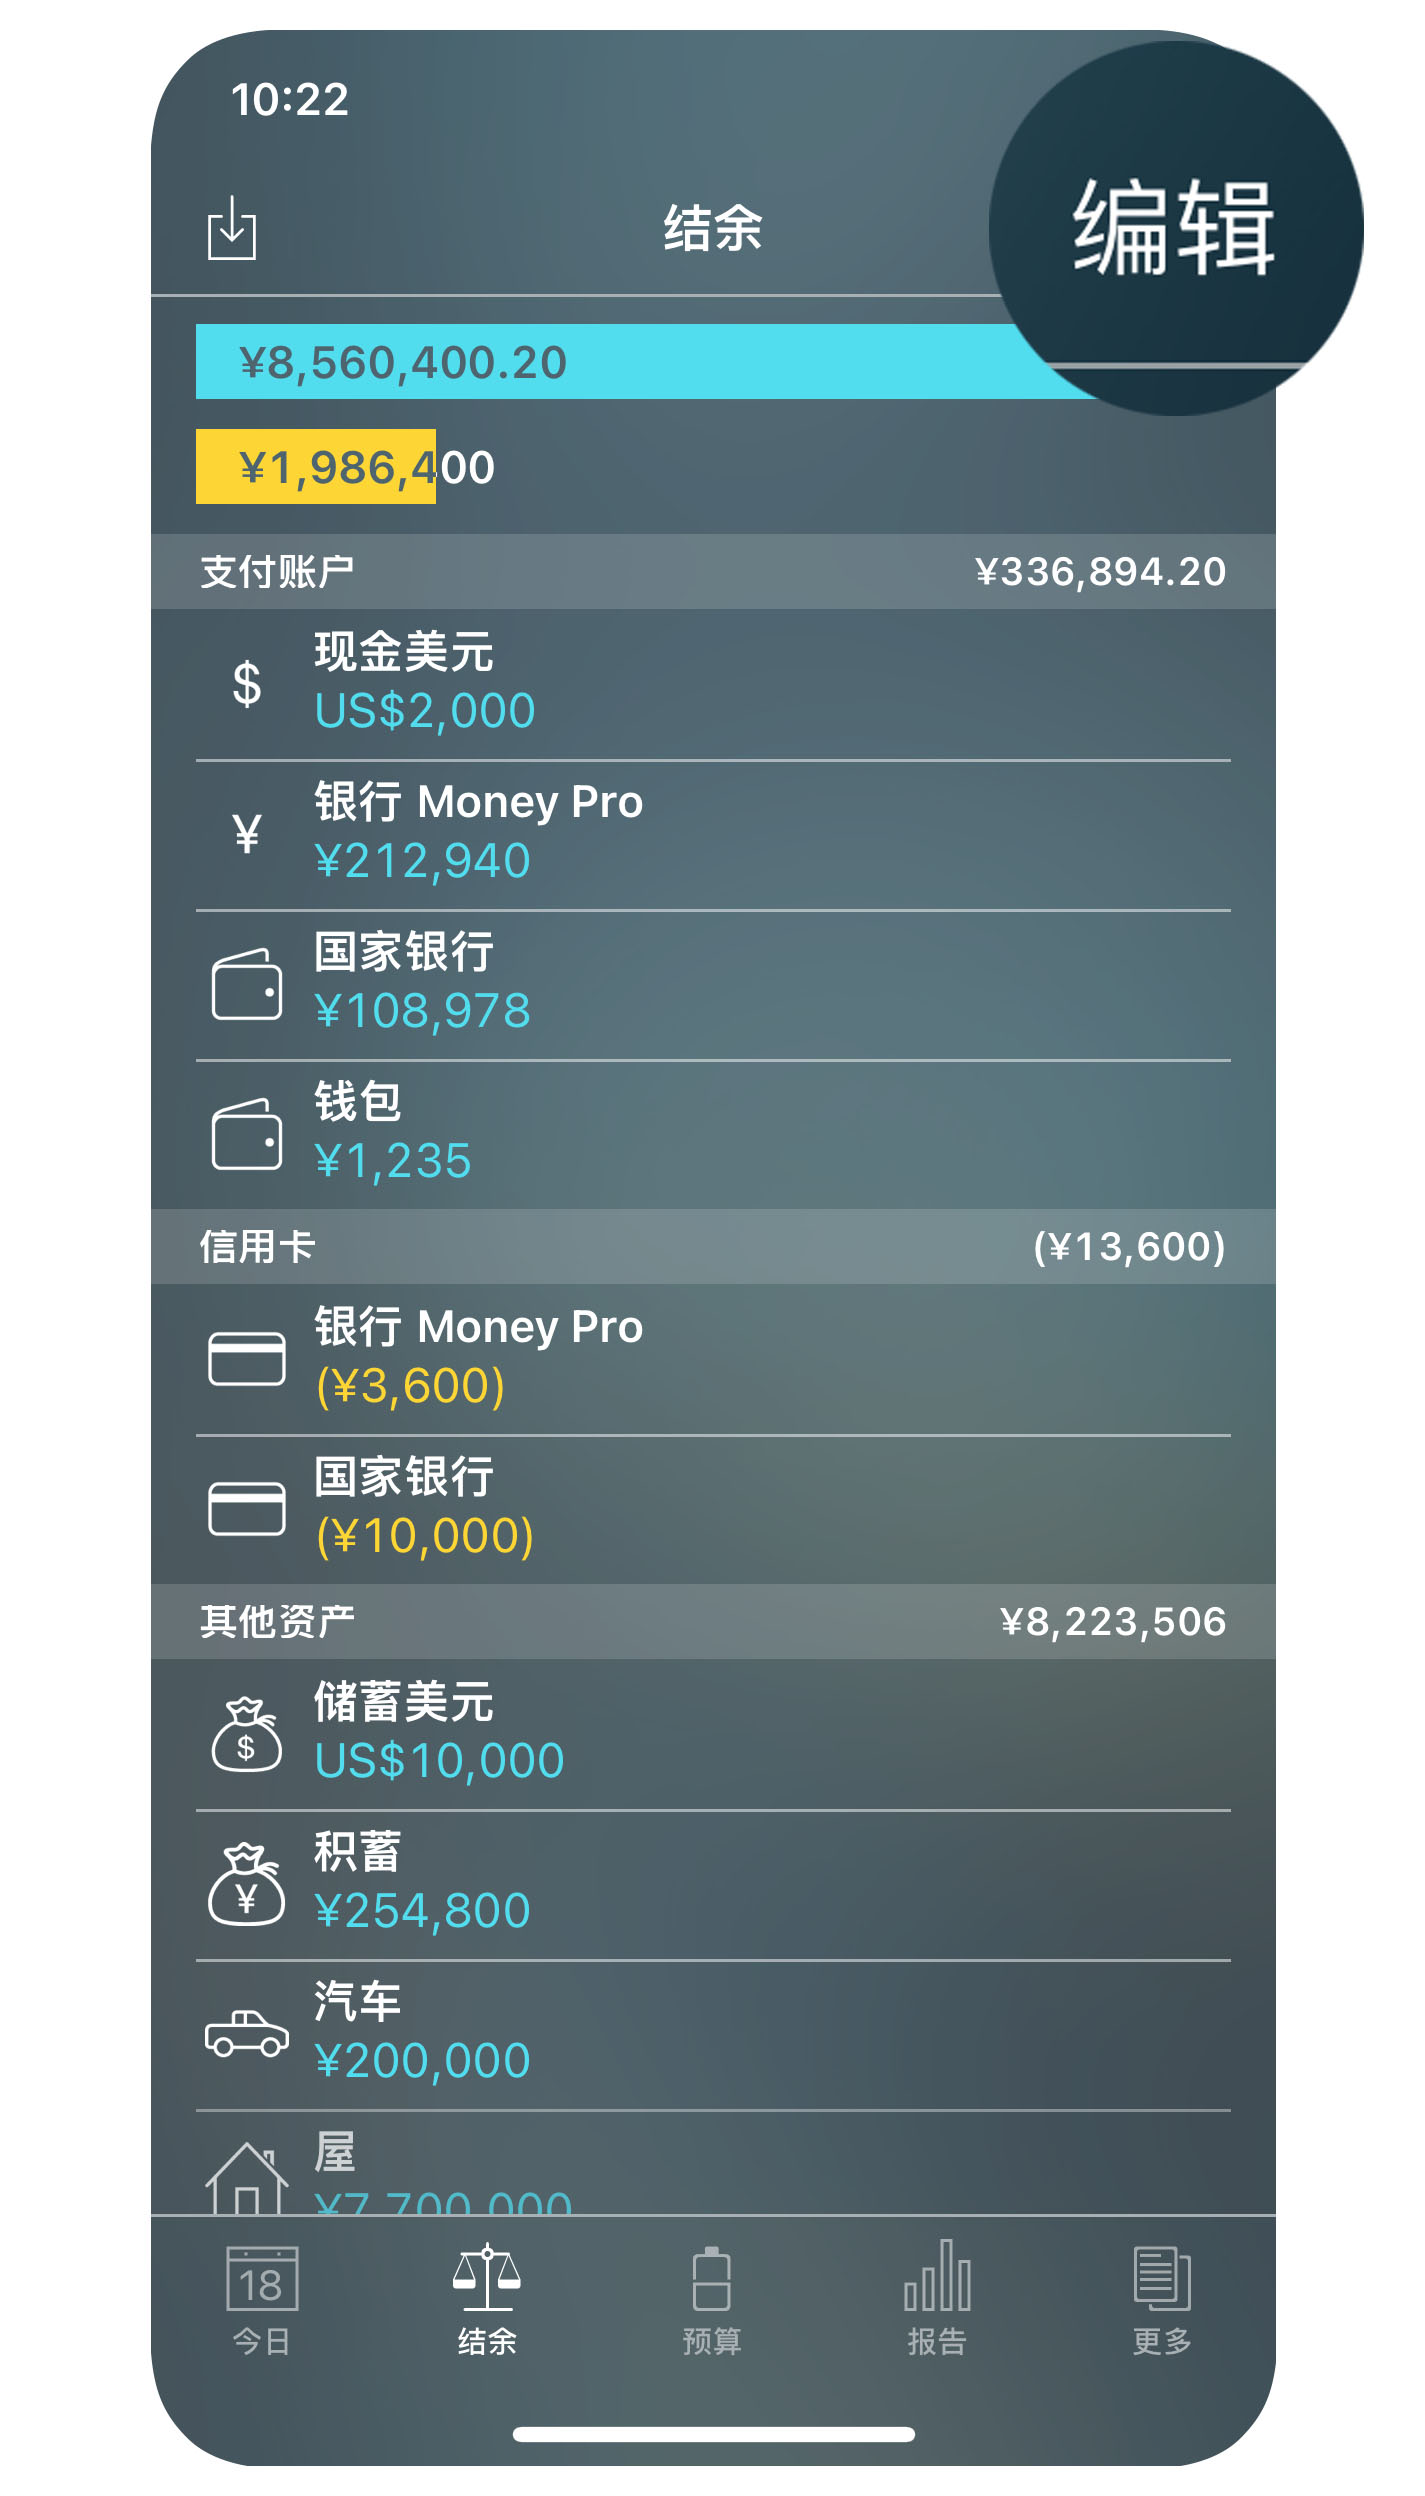 Money Pro - 账户 - 编辑 - iPhone